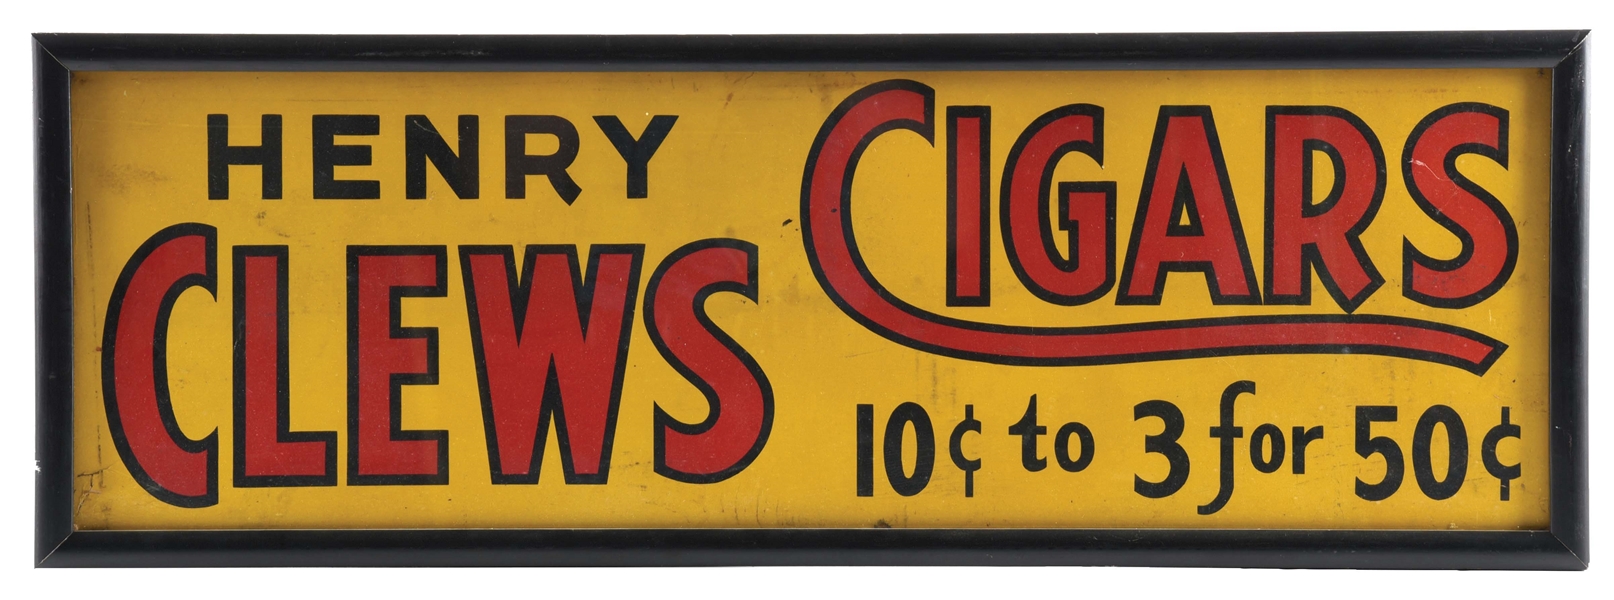 FRAMED HENRY CLEWS CIGARS AD.